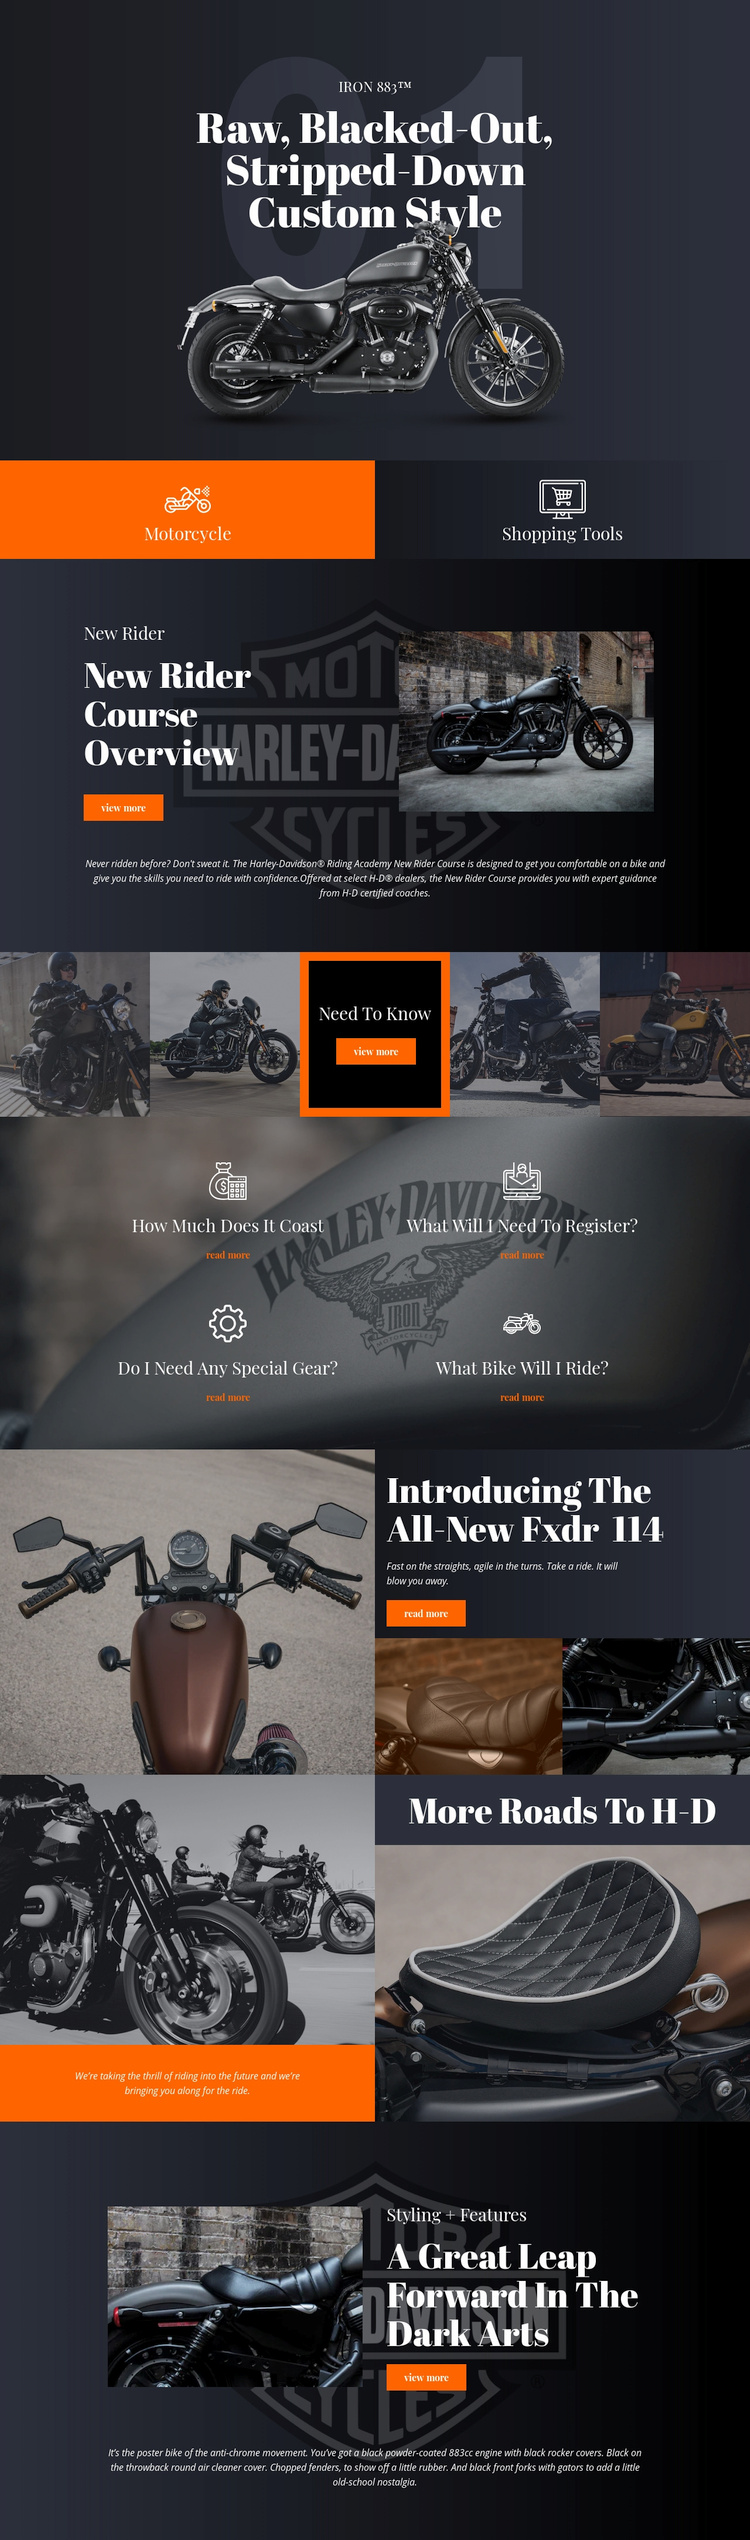 Harley Davidson Wix Template Alternative